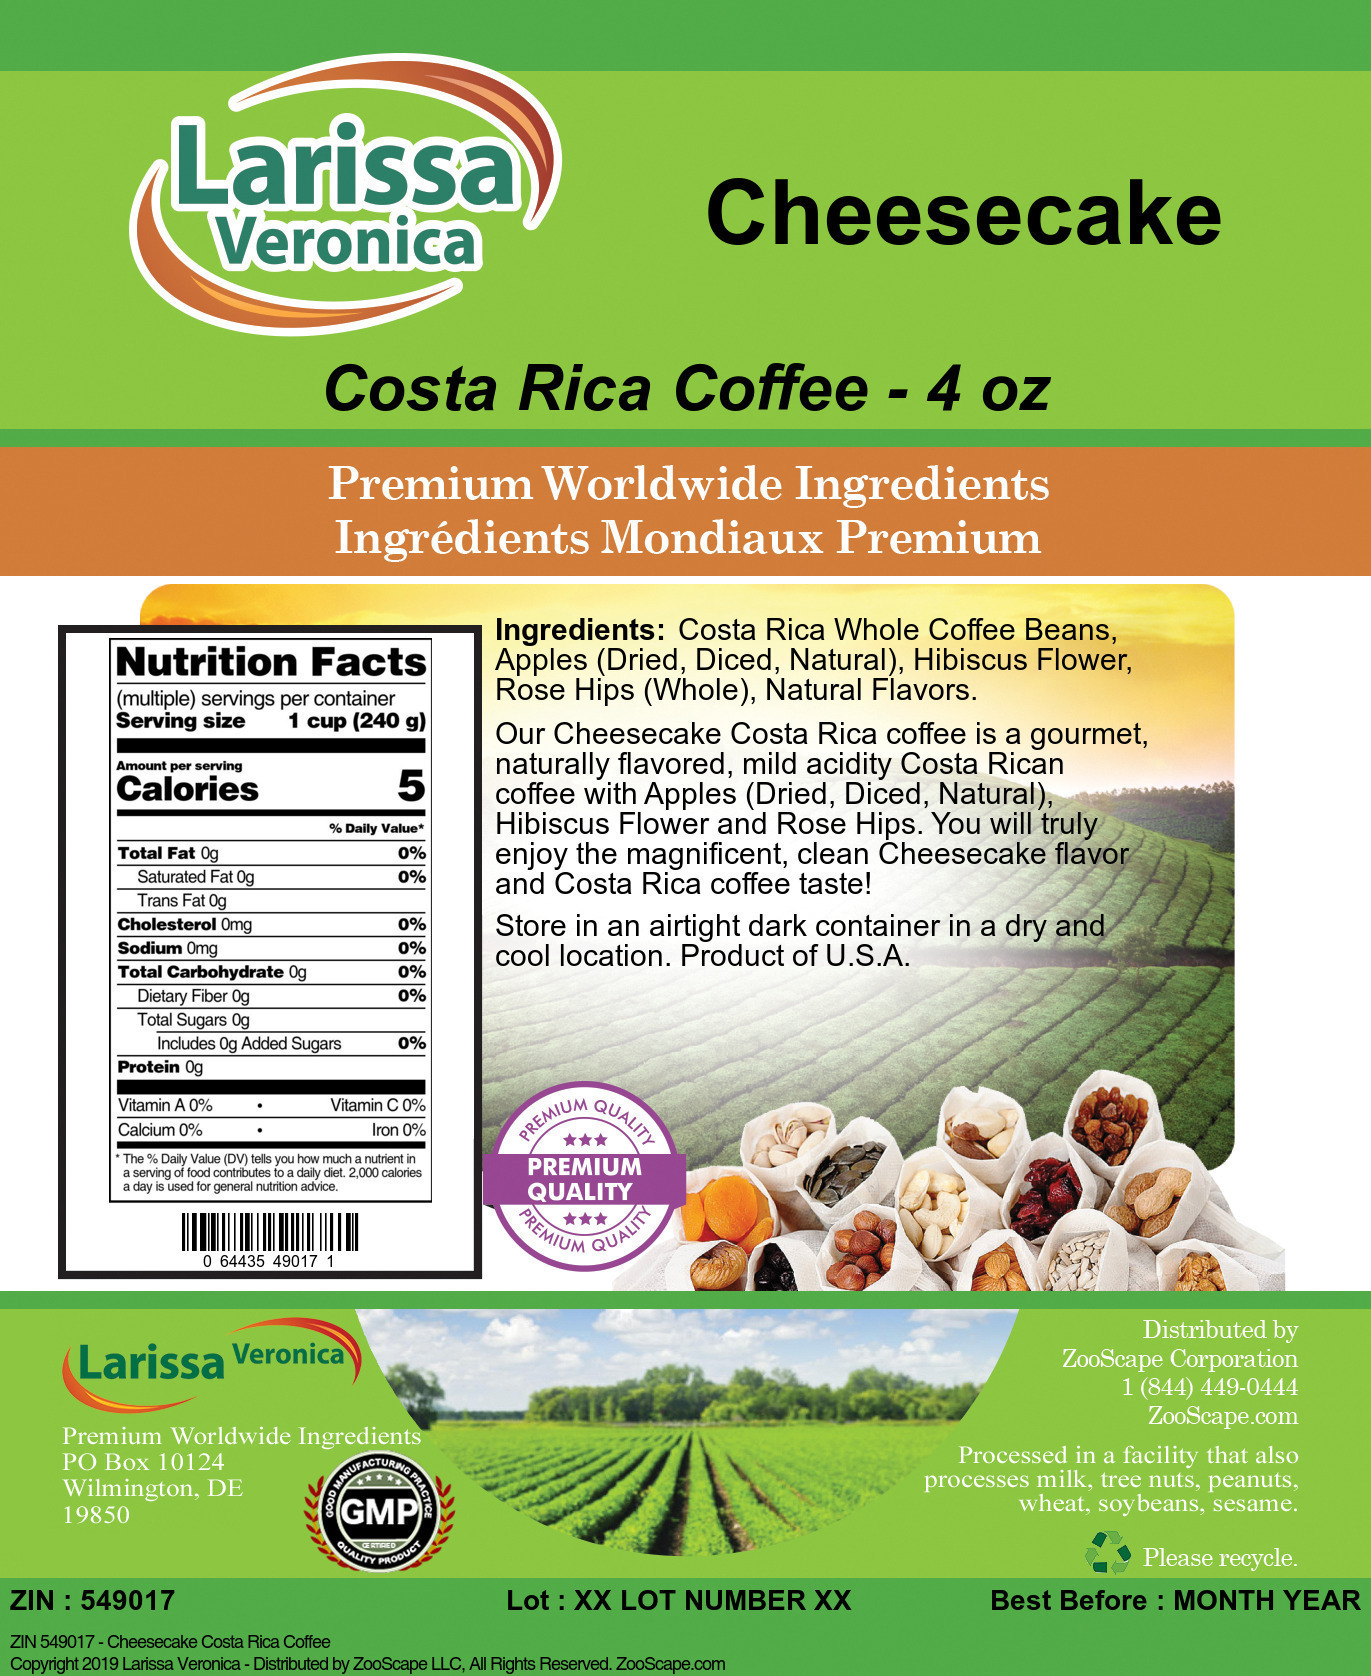 Cheesecake Costa Rica Coffee - Label